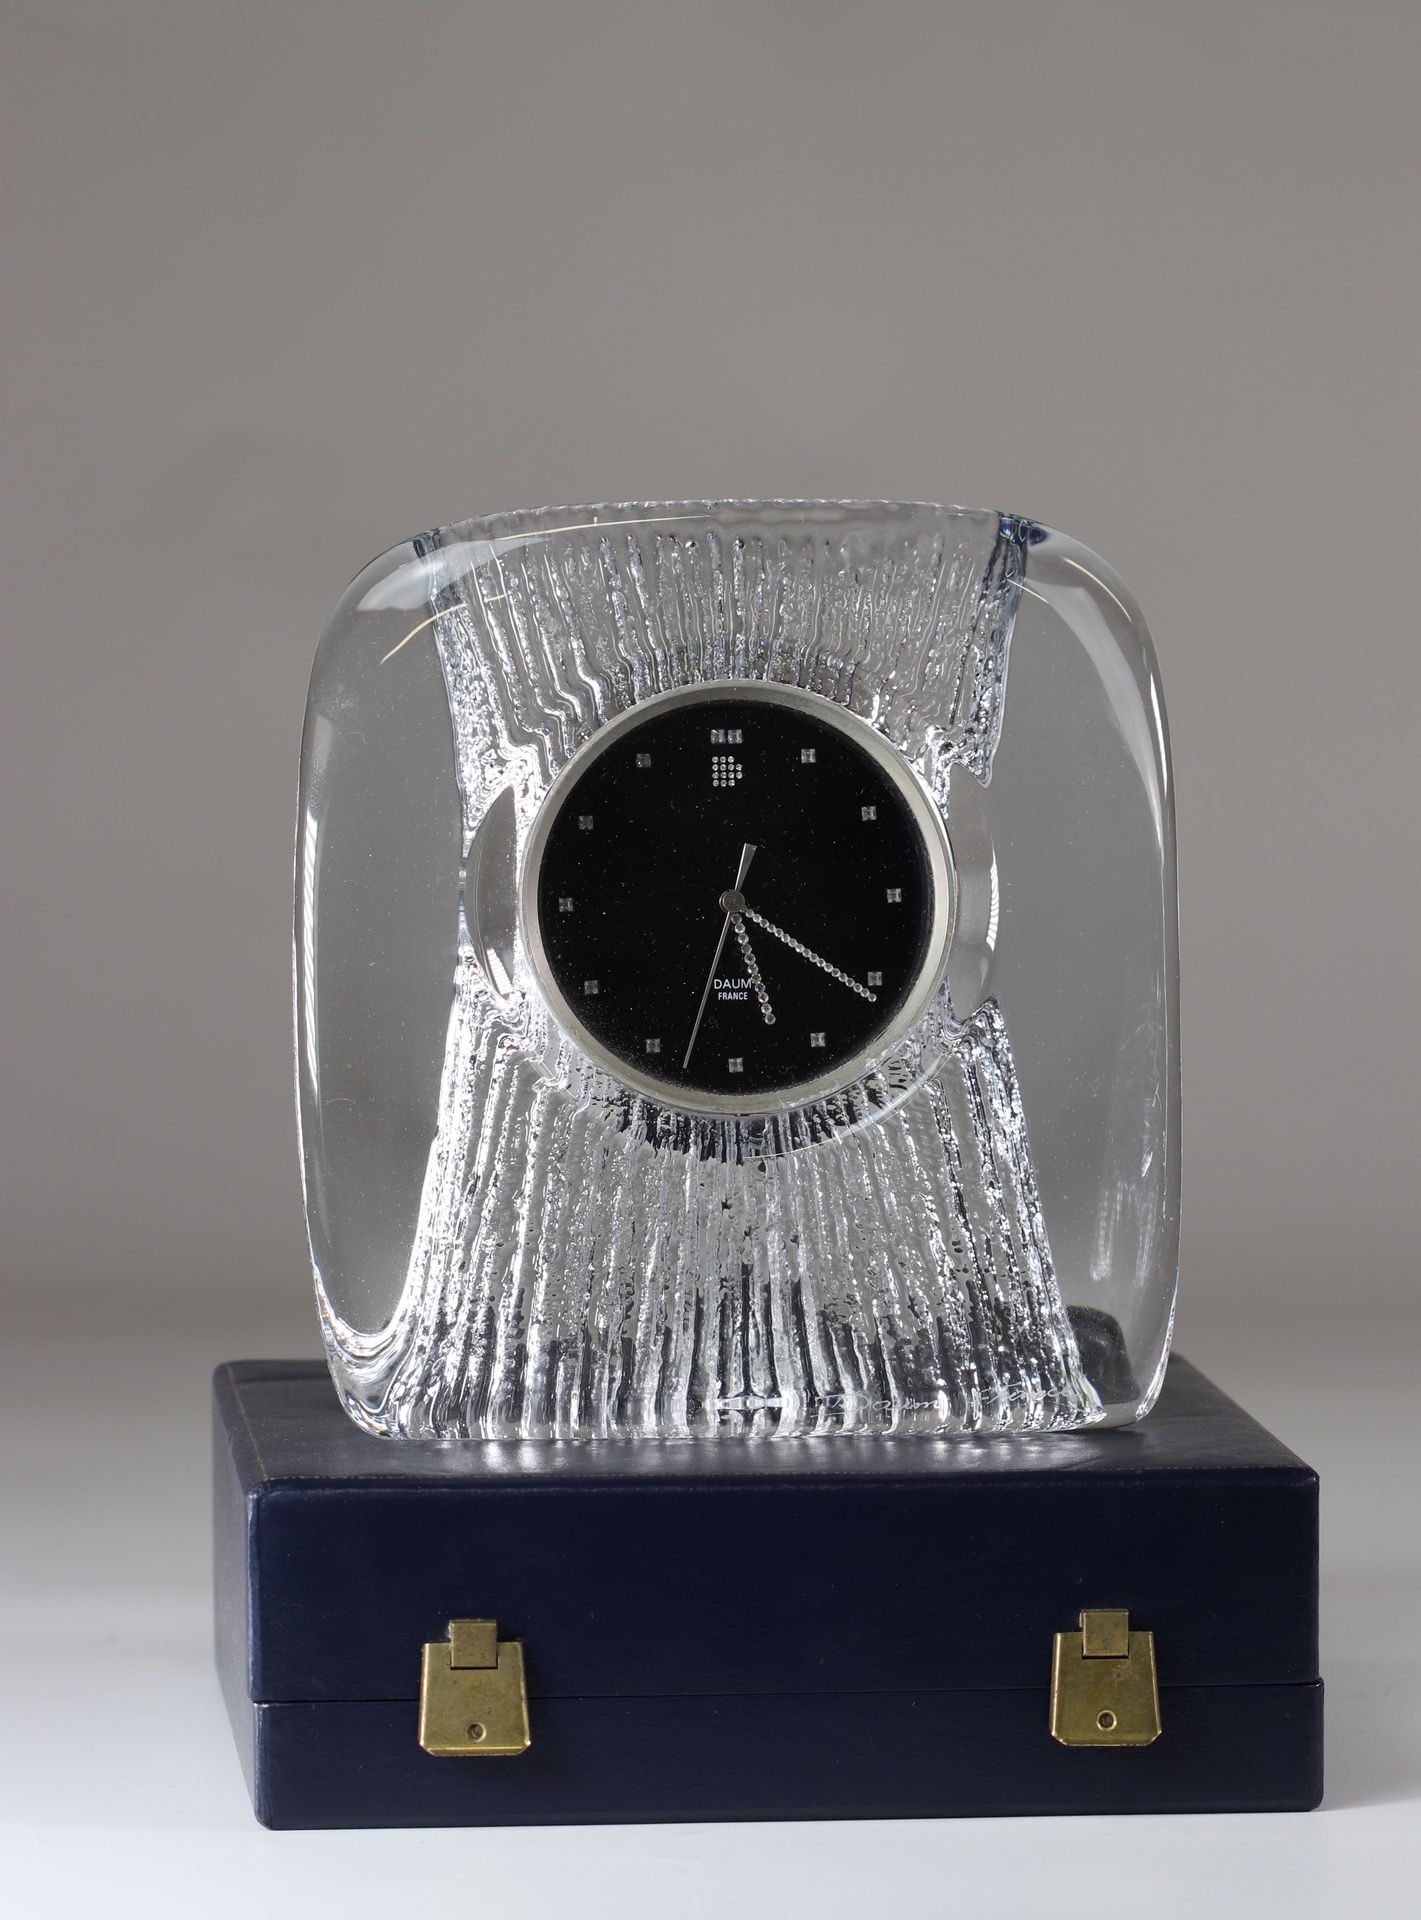 Pendule Daum Nancy dans son coffret Reloj Daum Nancy en su caja
Dimensiones: H=7&hellip;